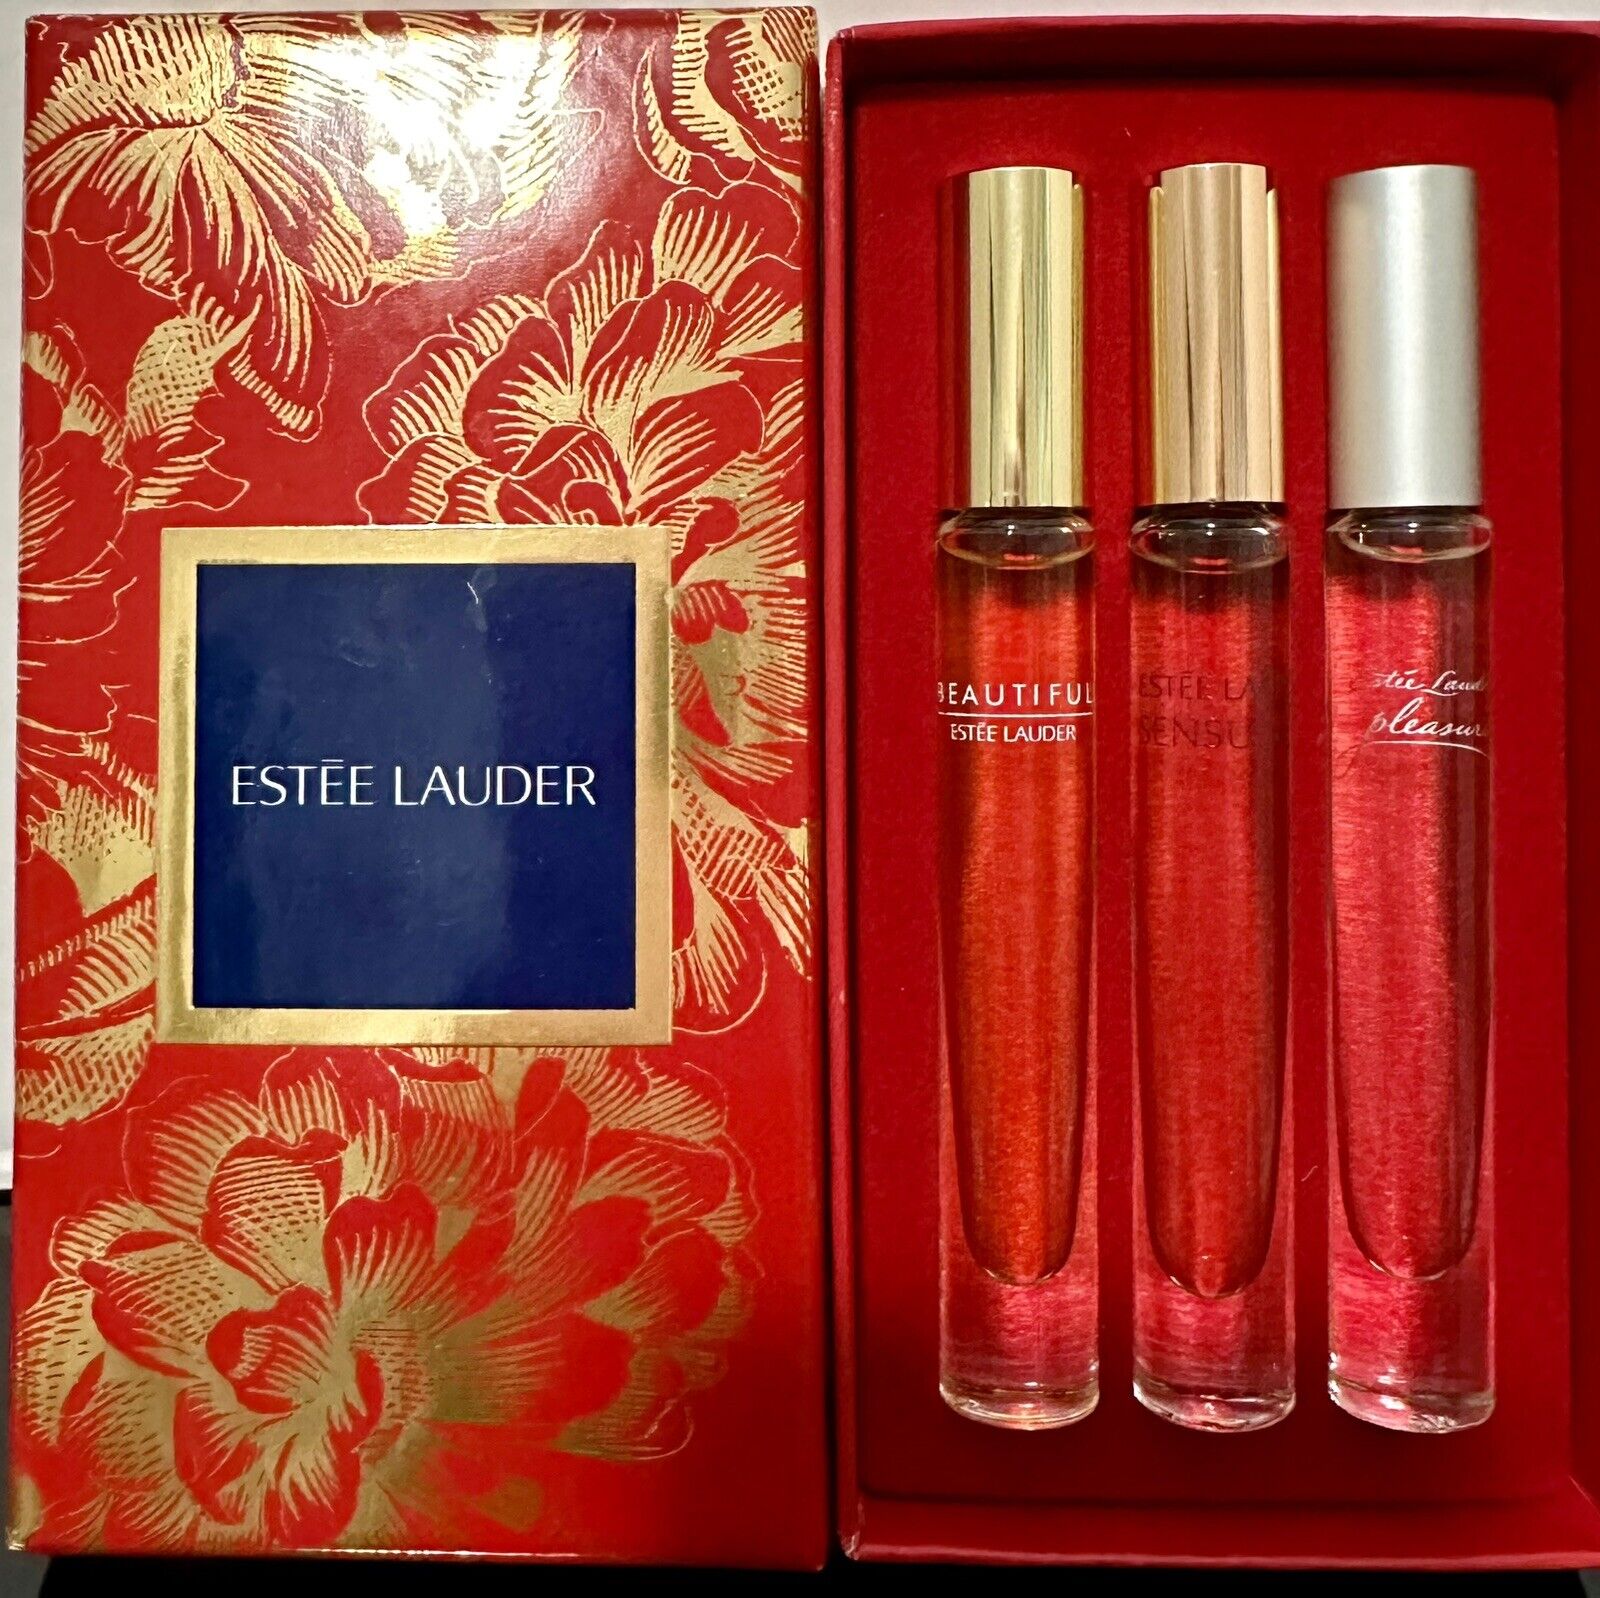 Estee Lauder Beautiful Pen Pals Parfum Set 3 Beautiful Pleasures Sensuous